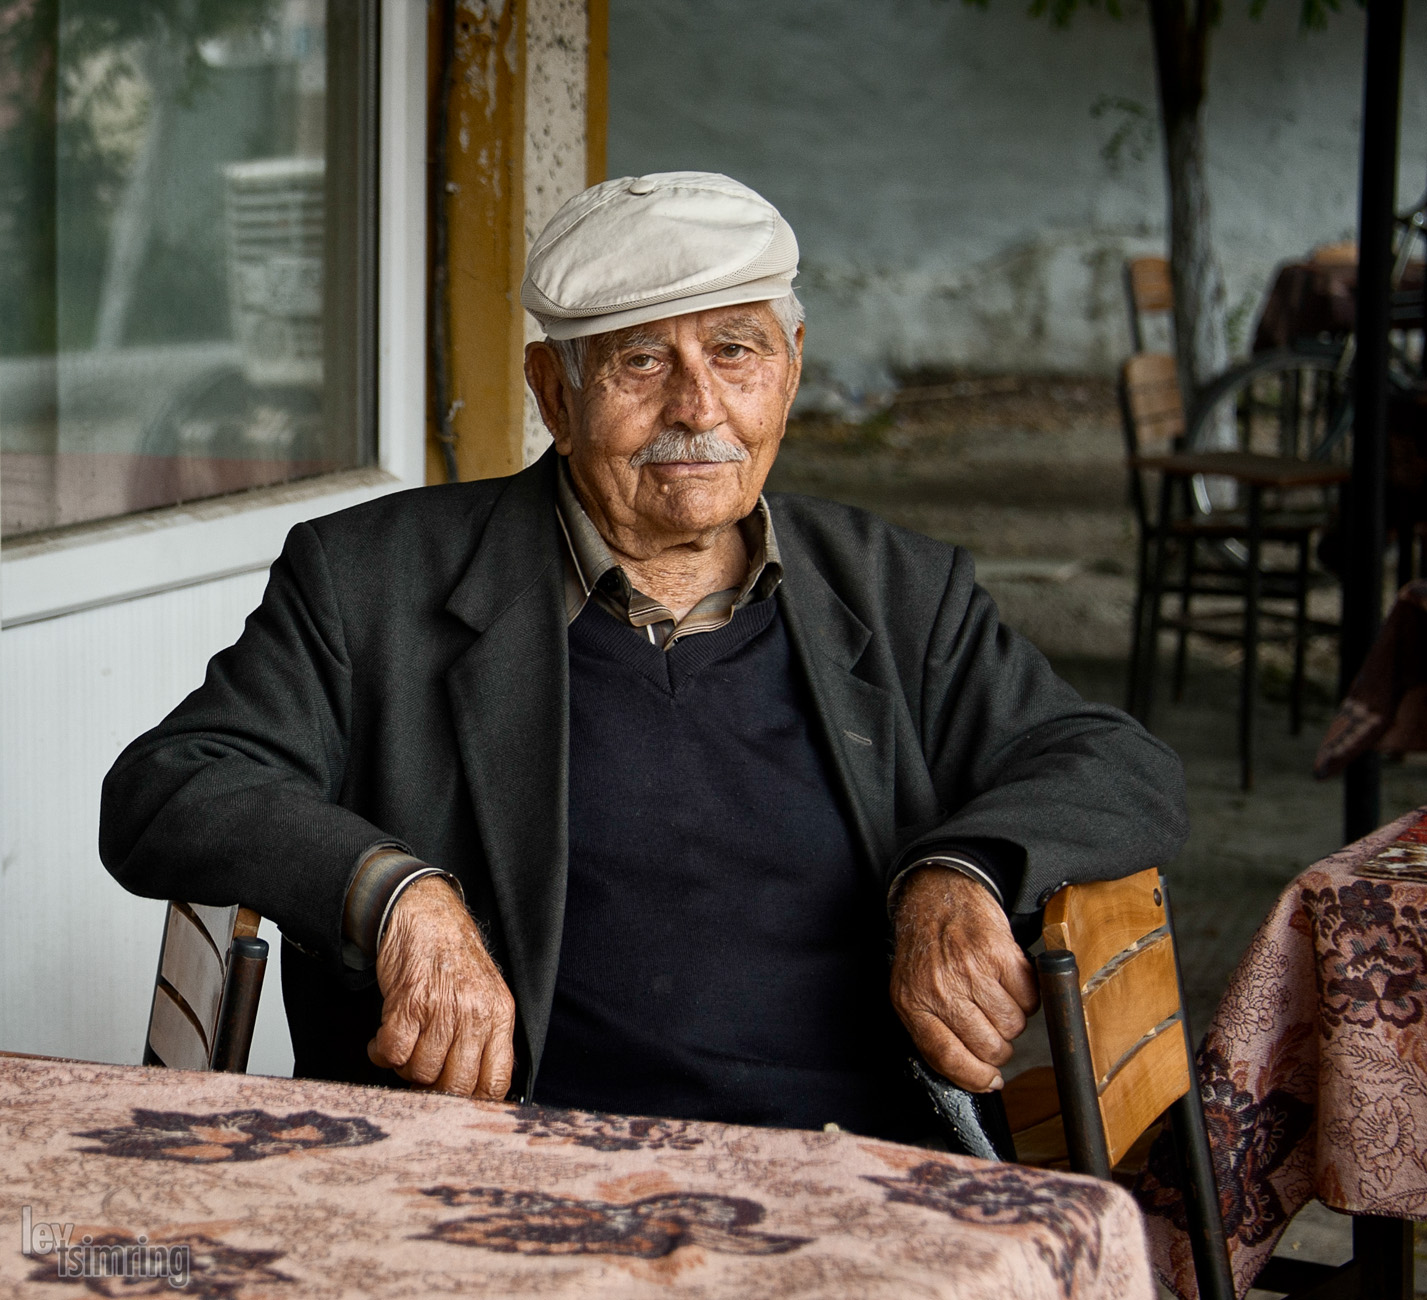 Selcuk, Turkey (2012)